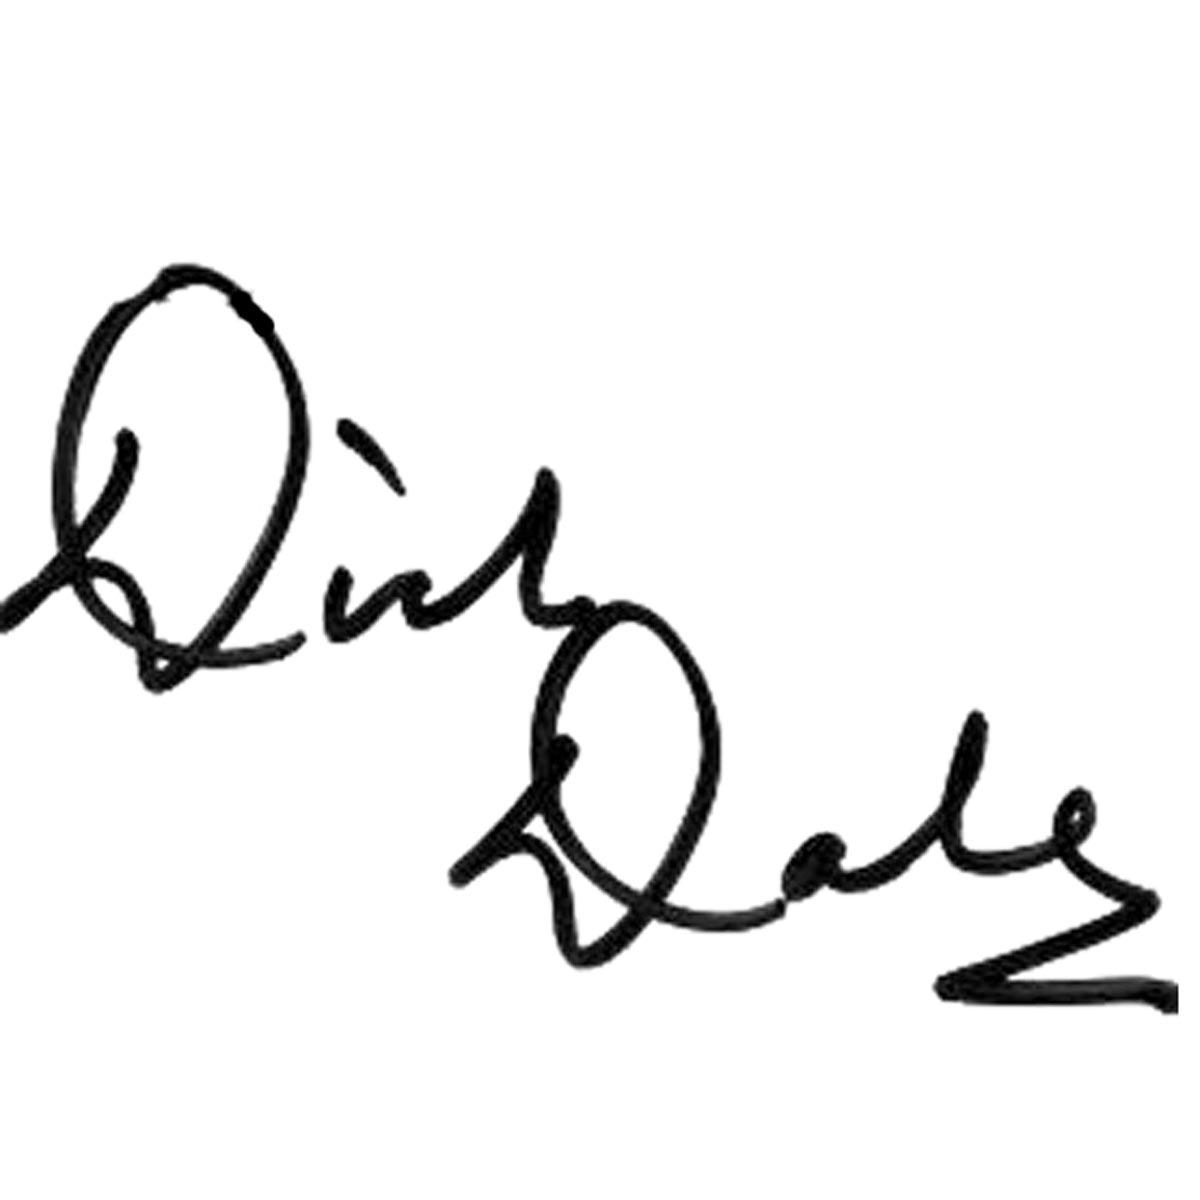 Dick Dale Signature Headstock Waterslide Decal